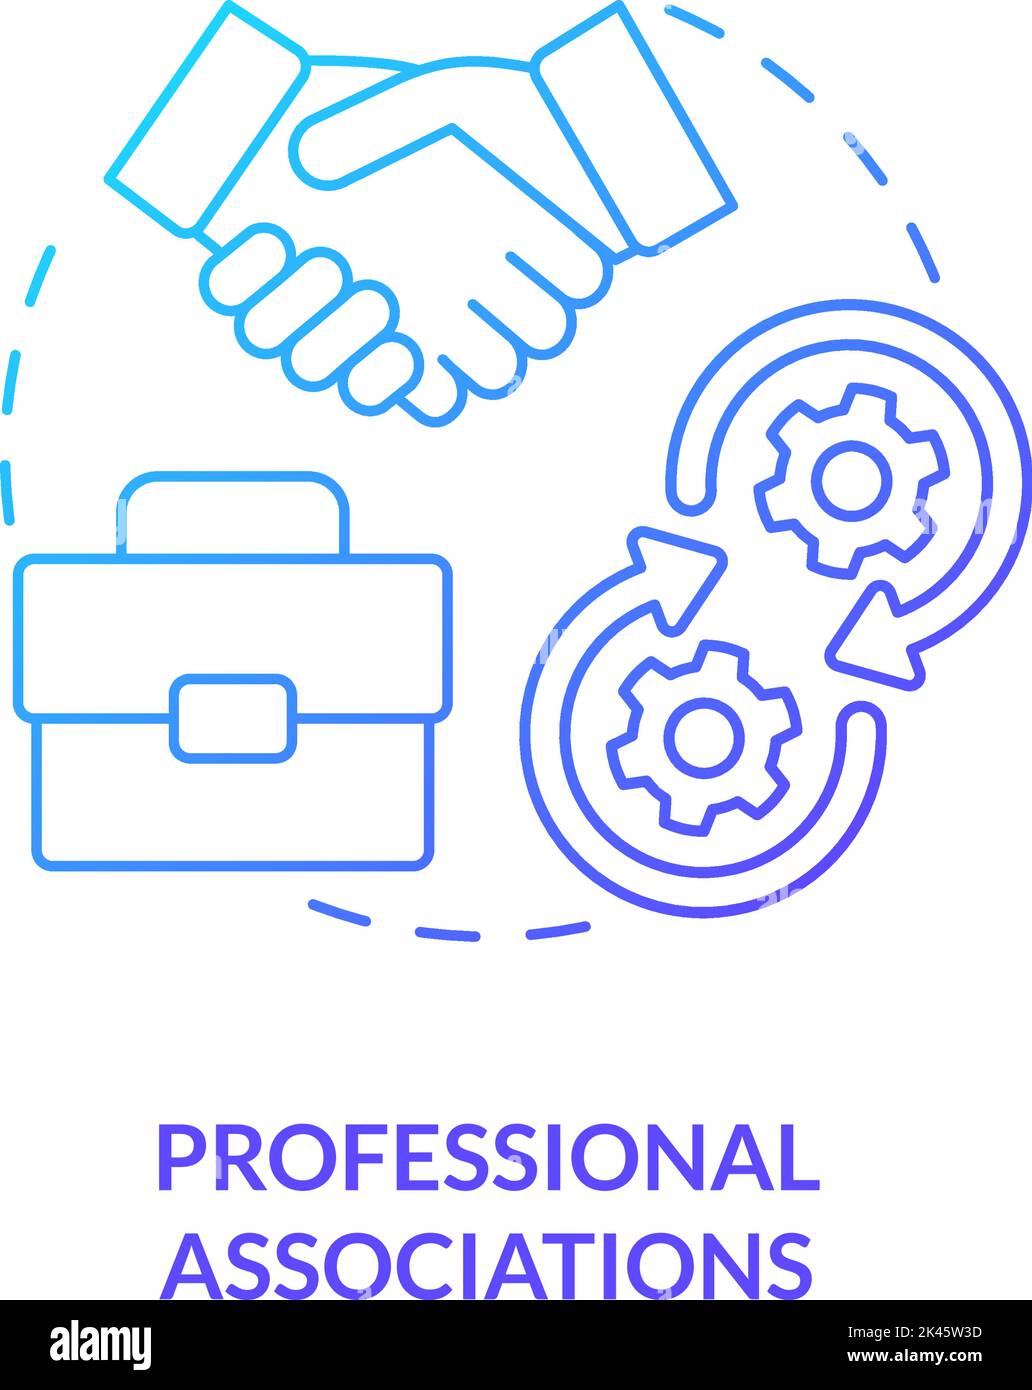 Professional associations blue gradient concept icon Stock Vector